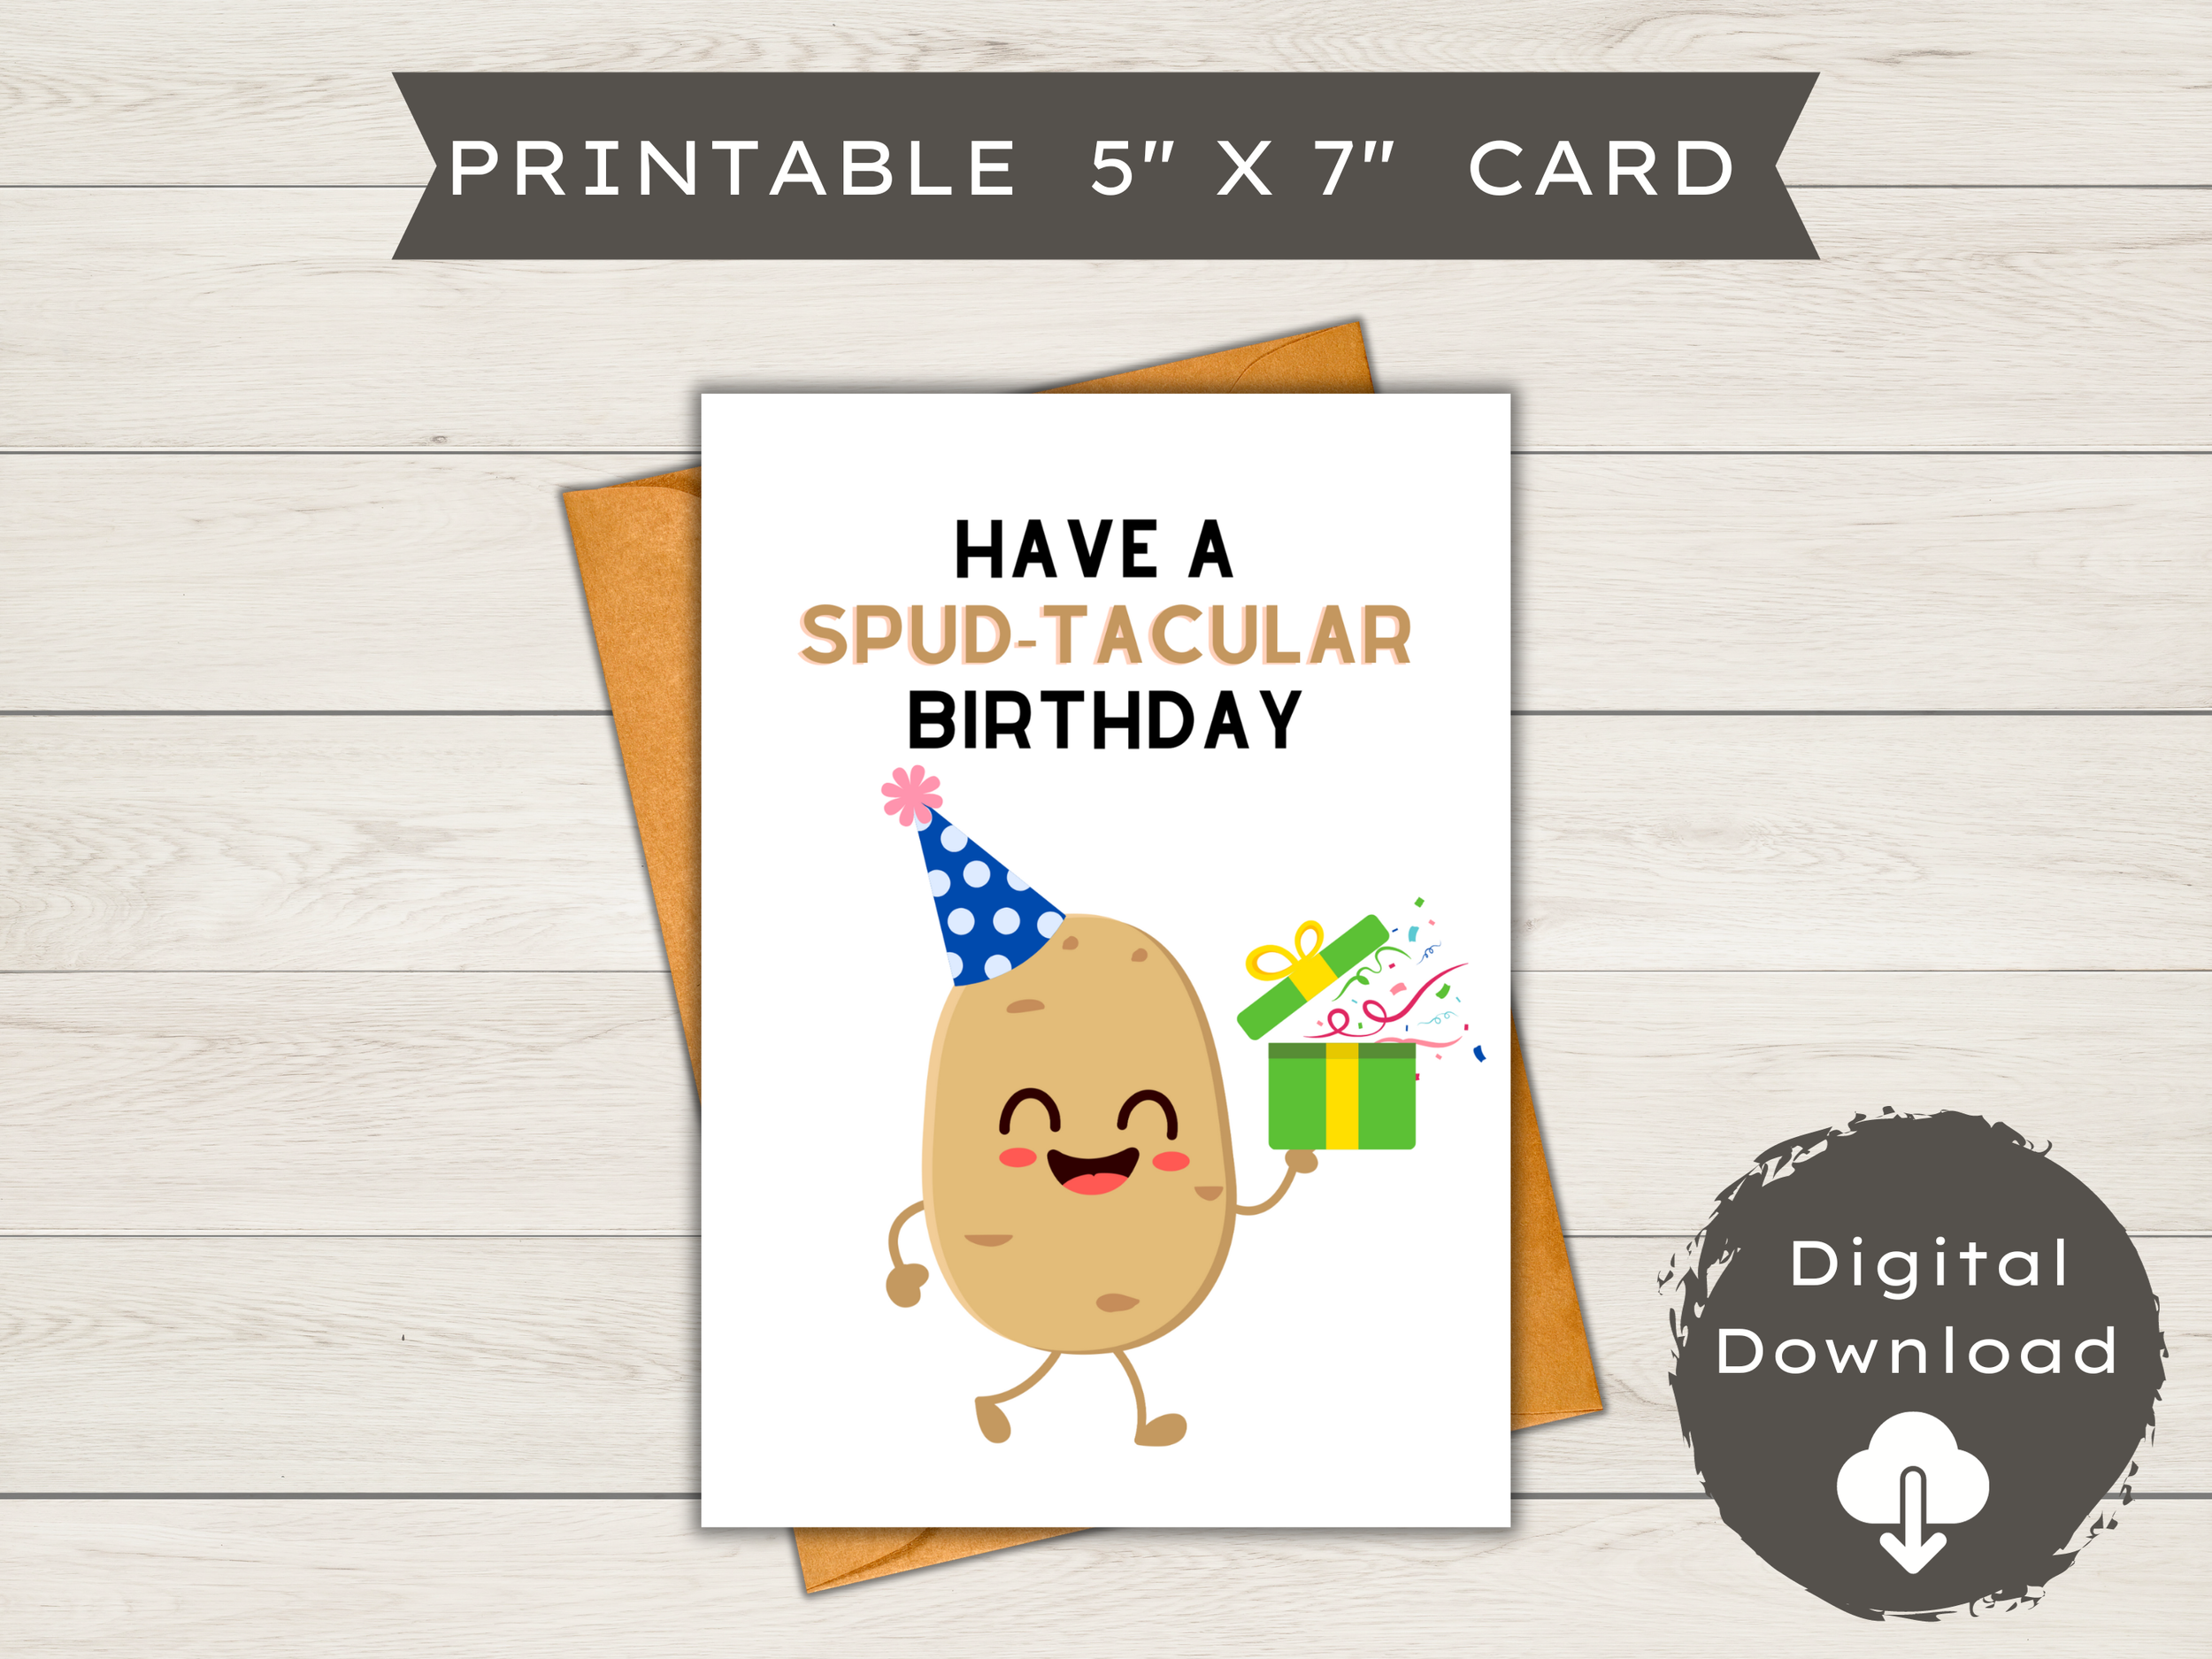 Printable Birthday Card - Spud-tacular Birthday